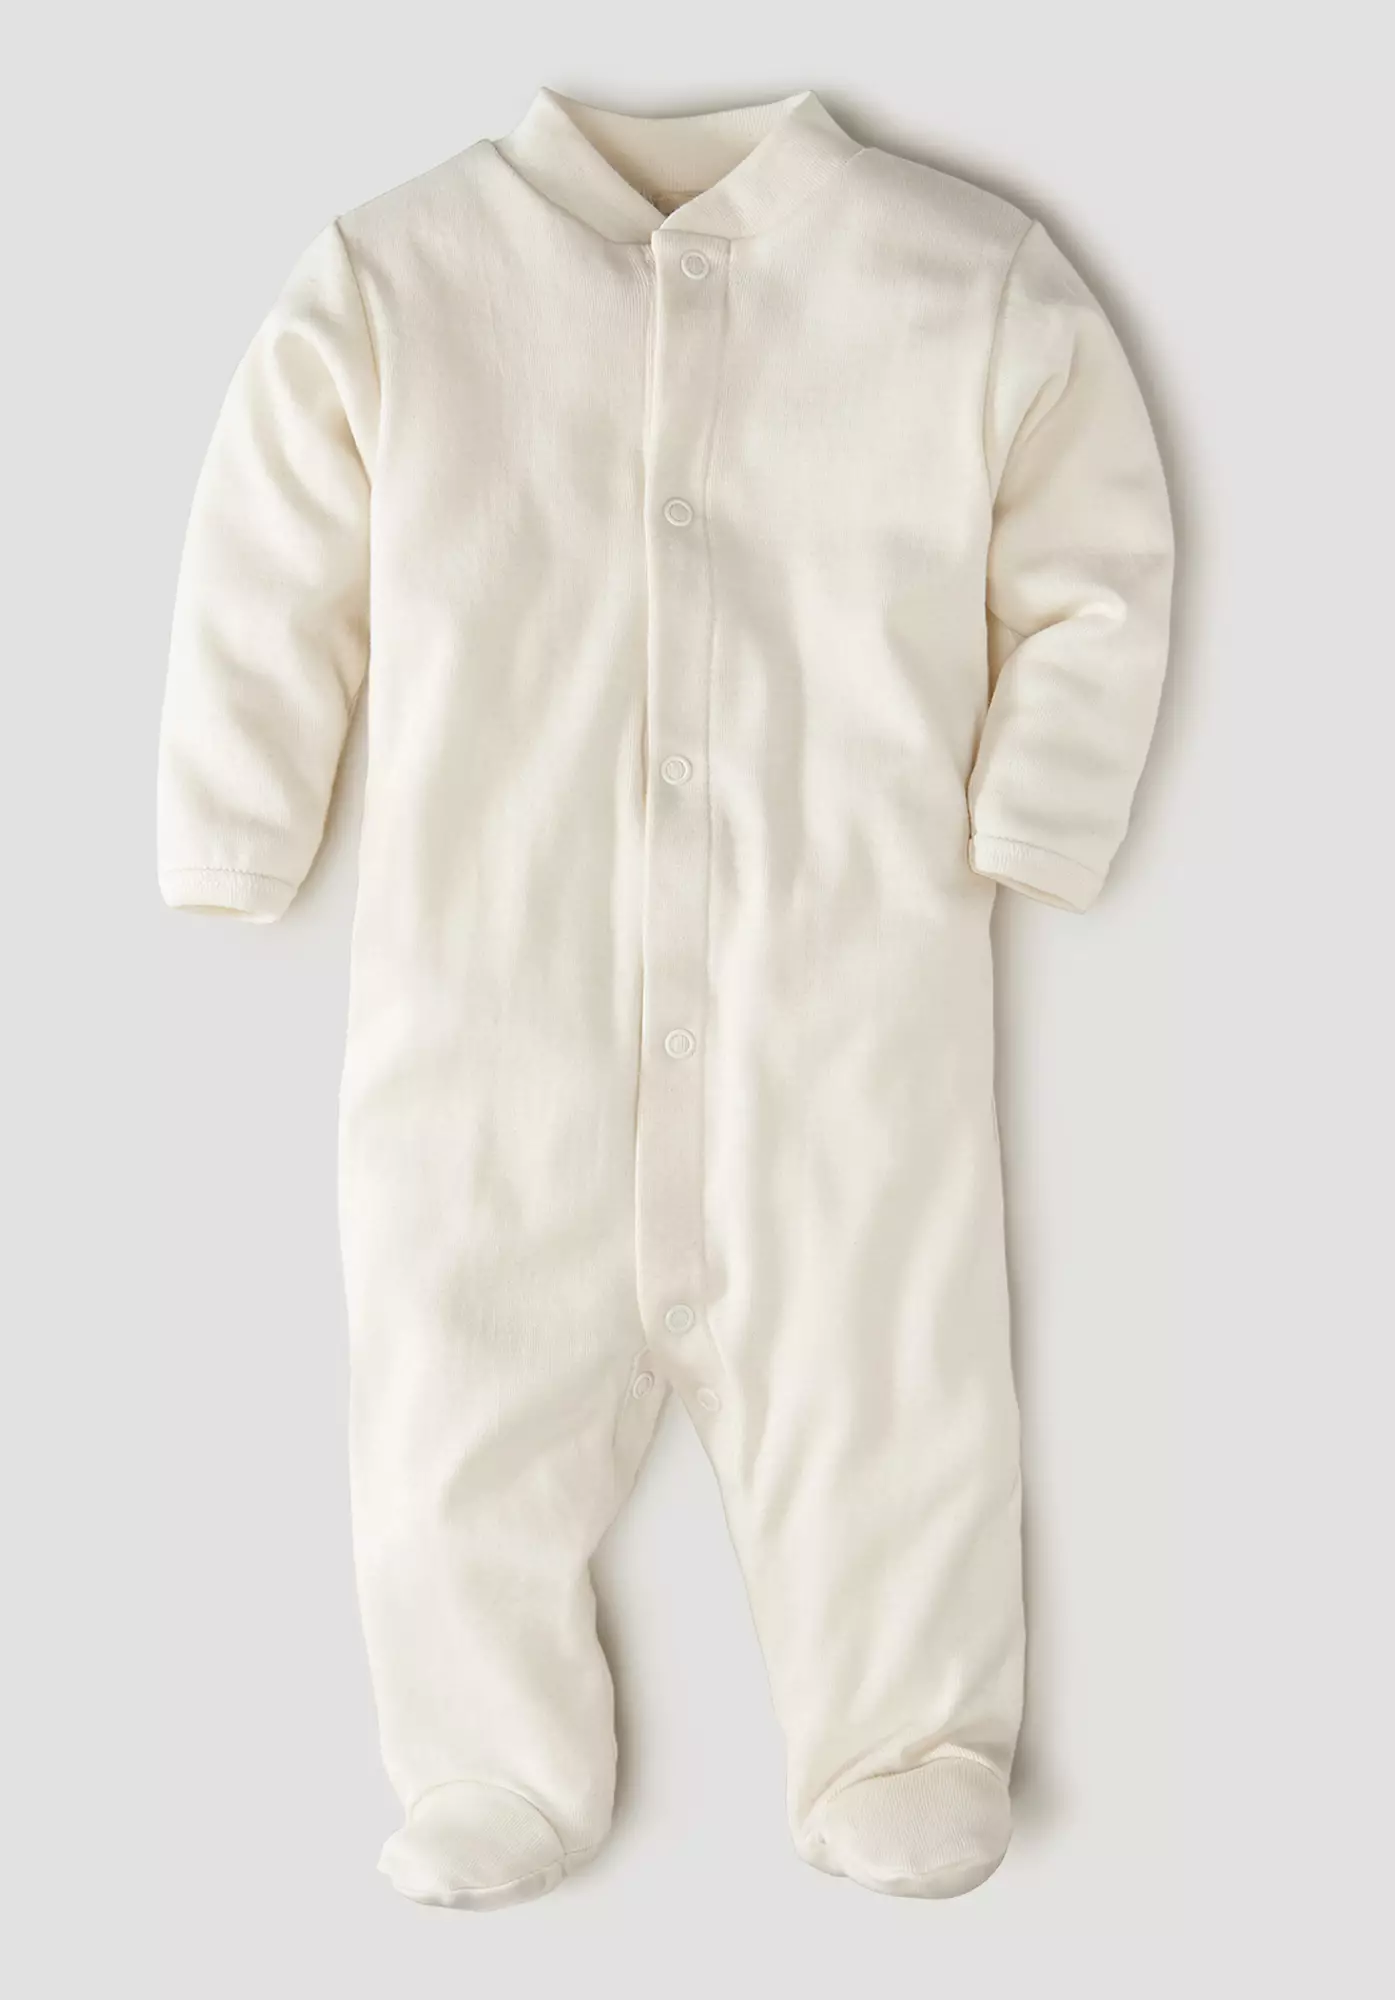 Regular sleepsuit made from pure organic cotton - 0